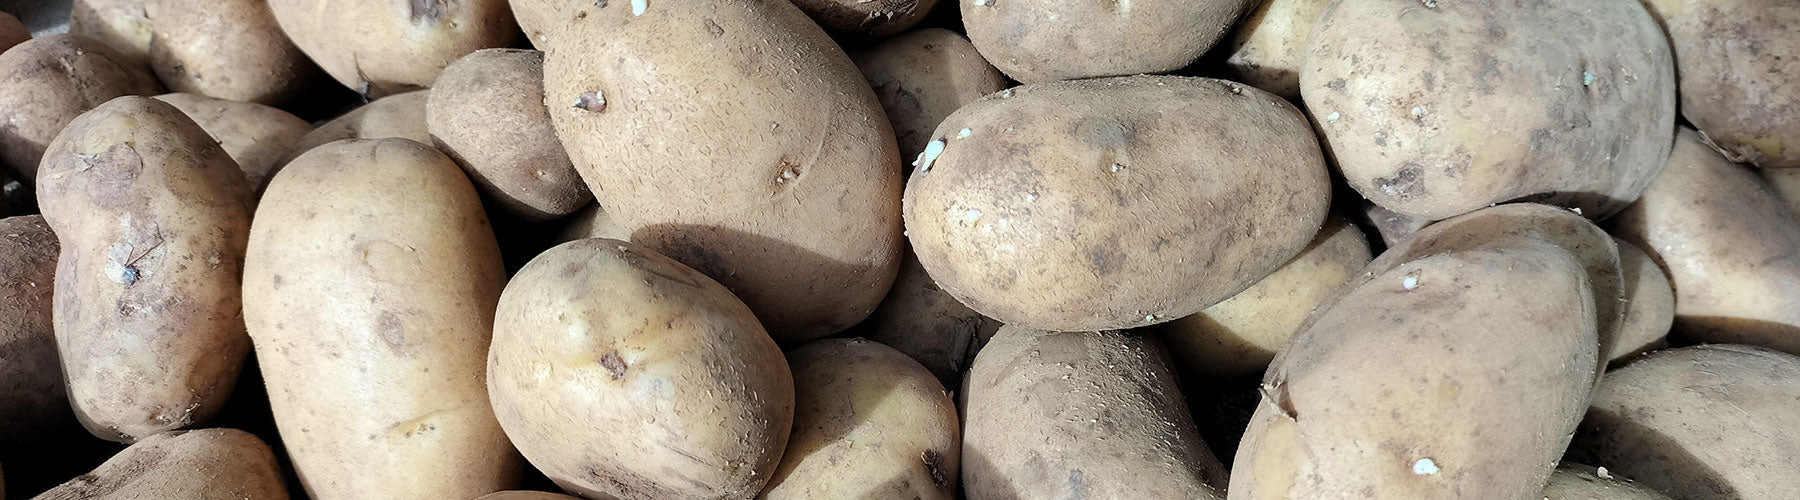 Greenpatch Seed Potatoes